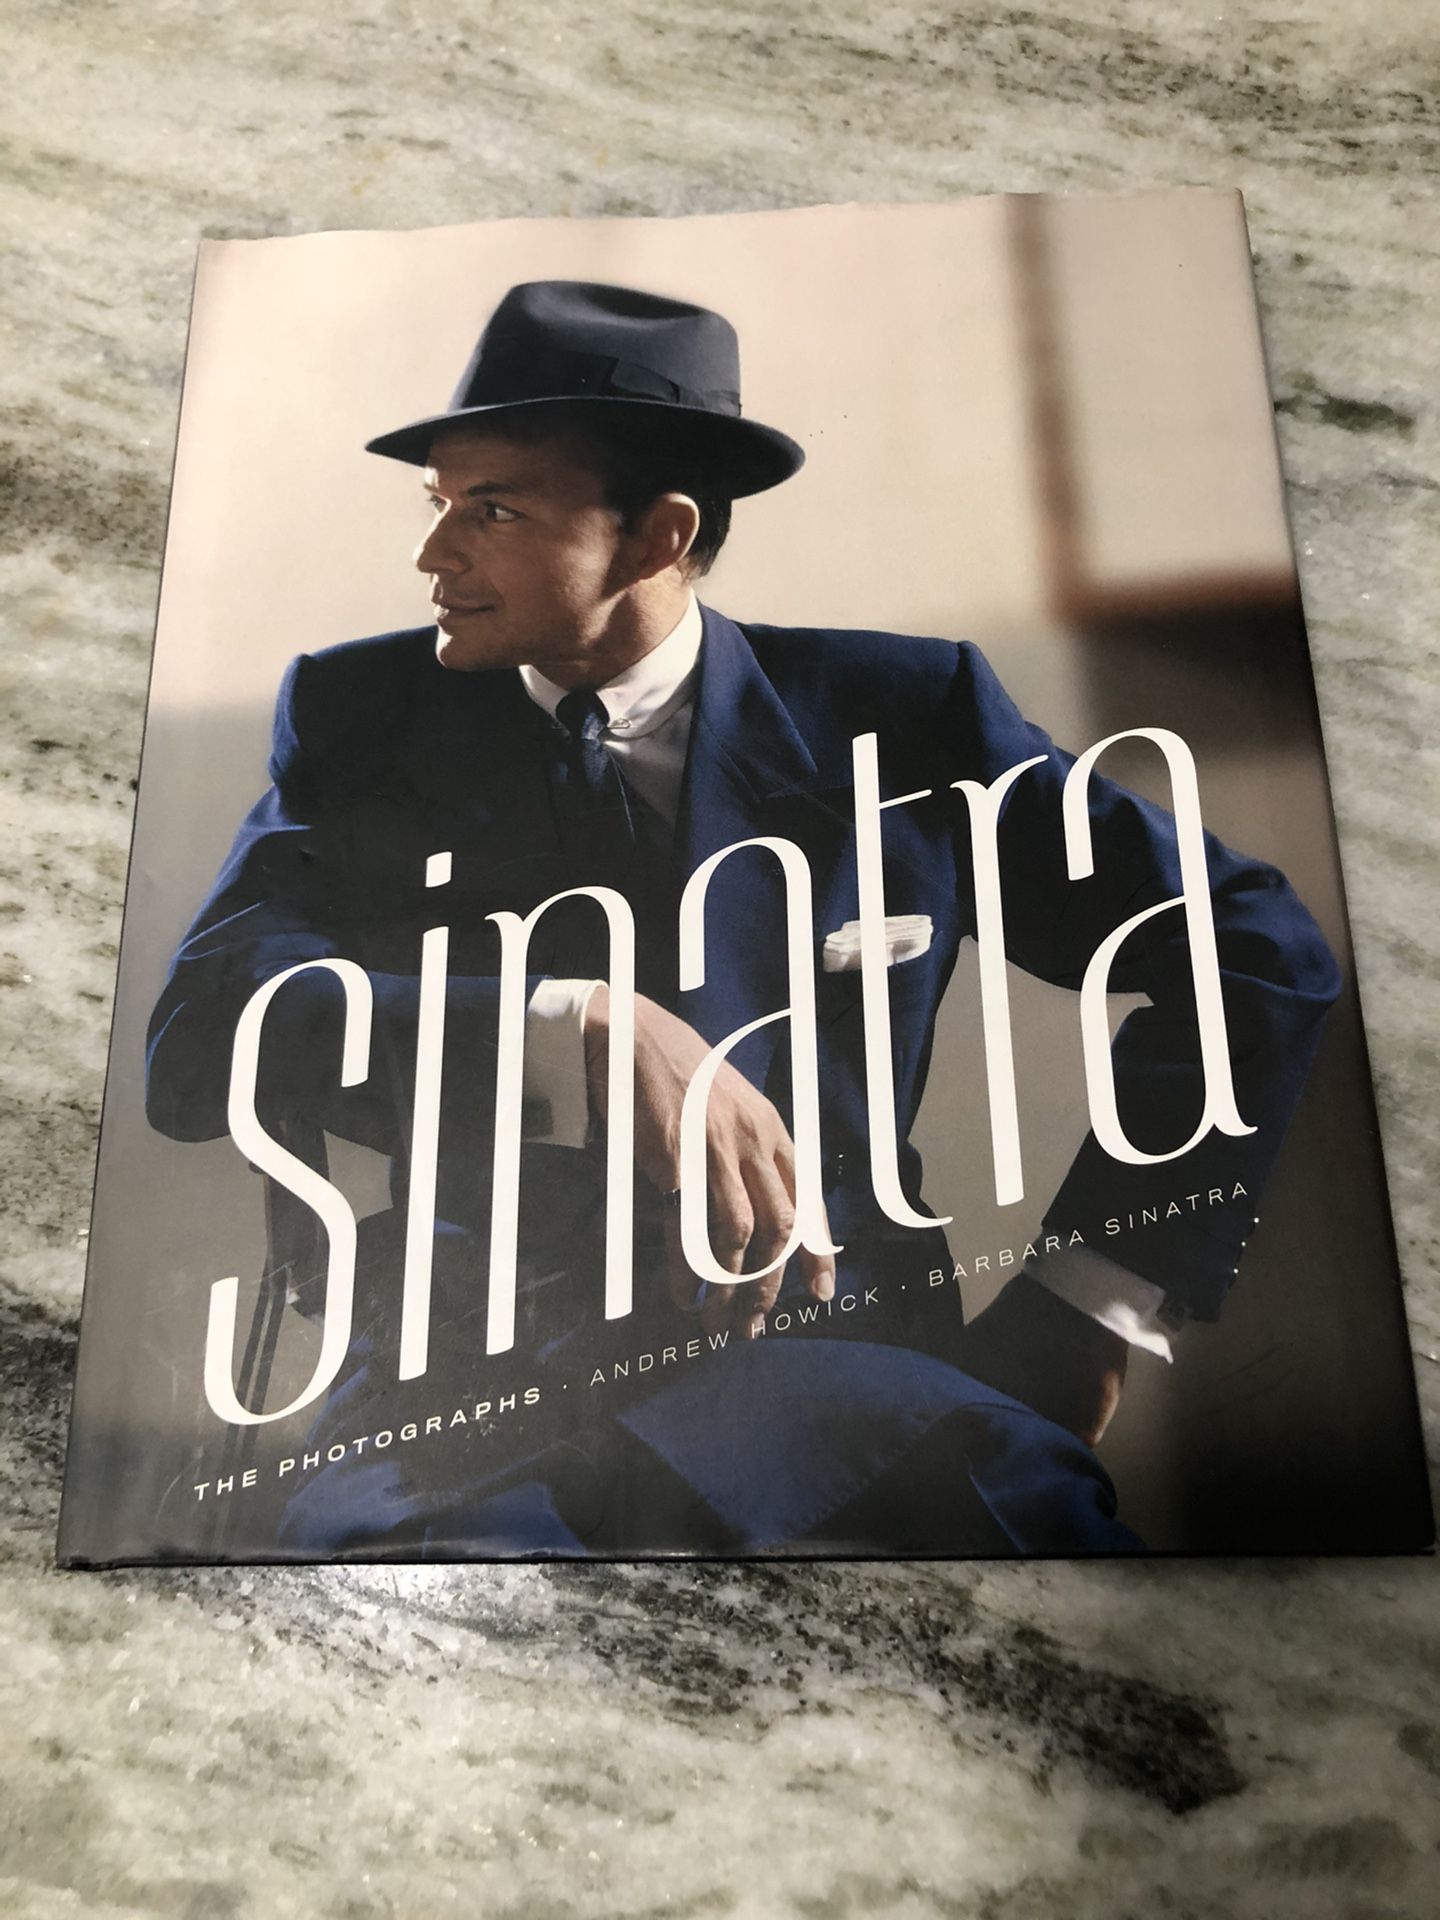 Frank Sinatra The Photographs